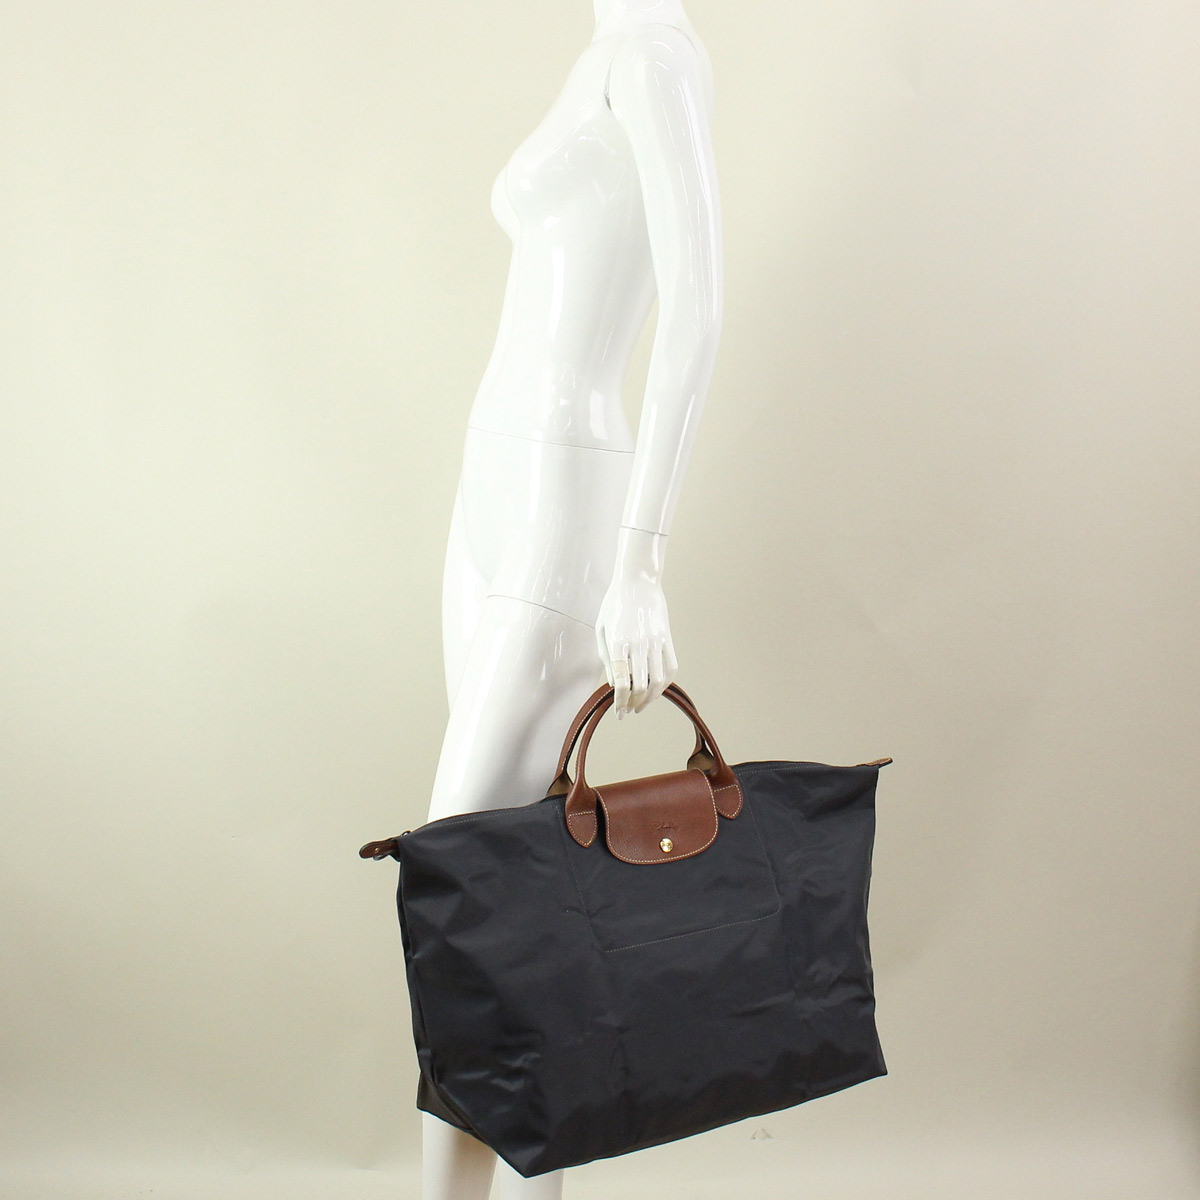 2014 New Longchamp Le Pliage Tote Bags 1624 089 Khaki Beige